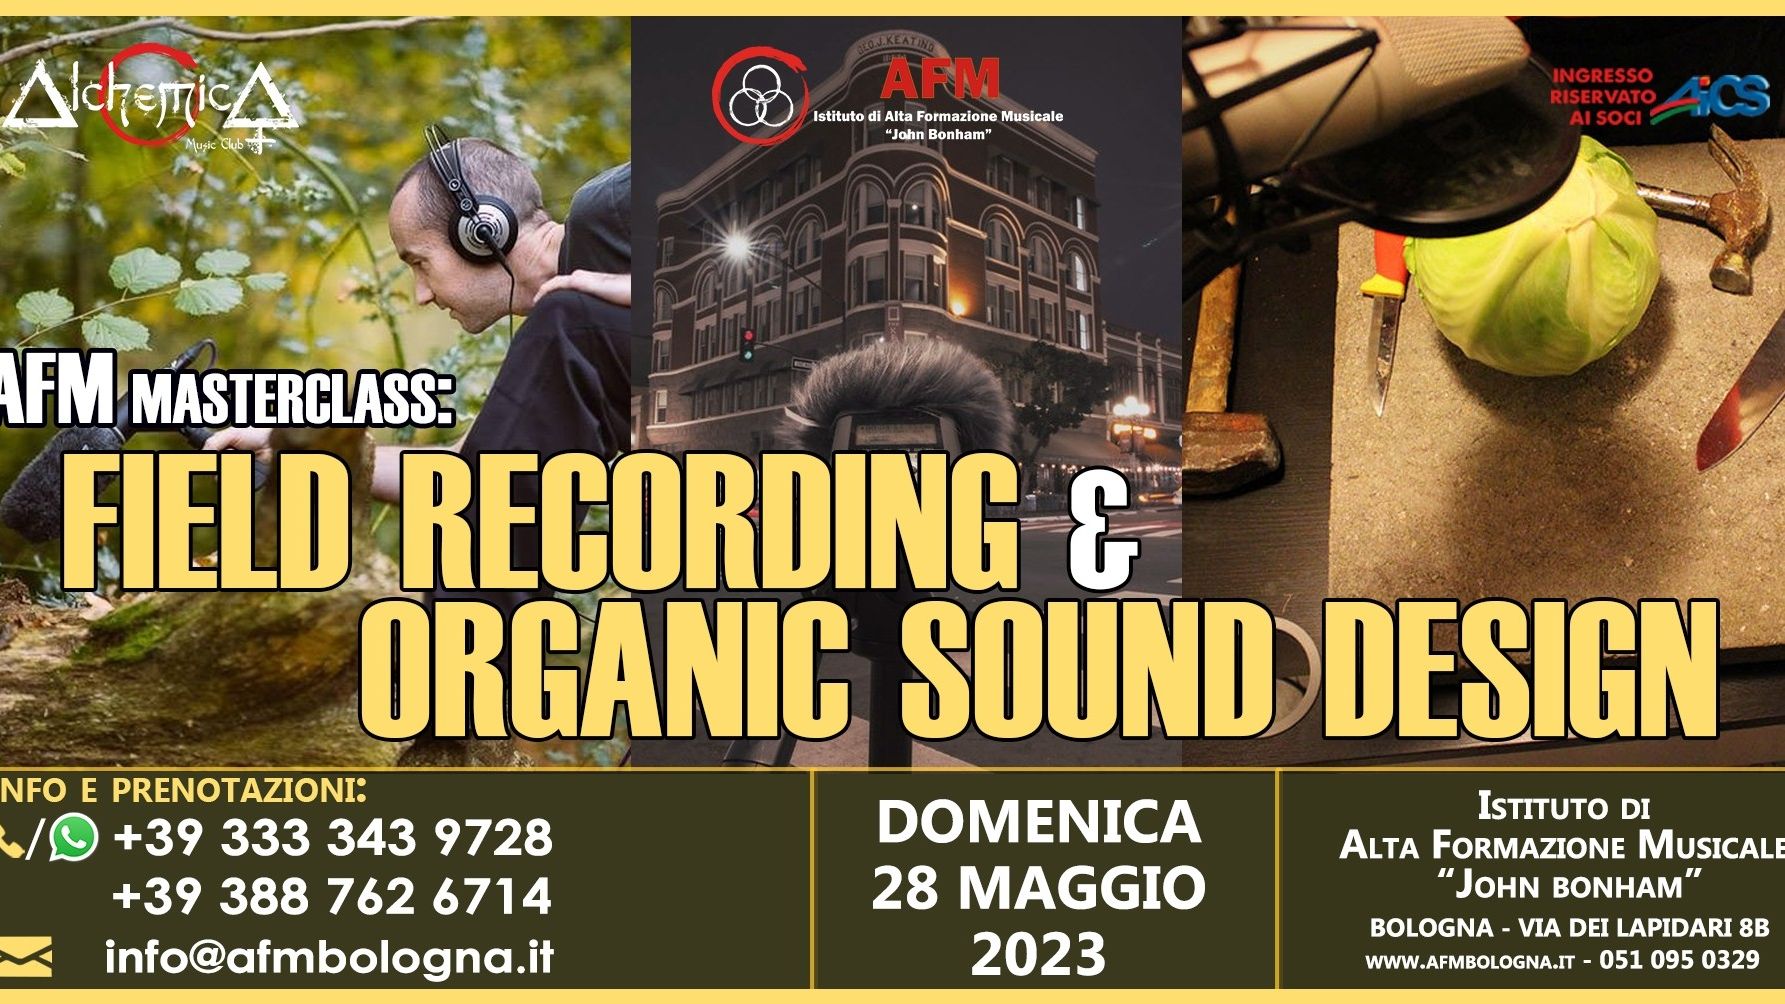 AFM Masterclass: Field Recording & Organic Sound Design